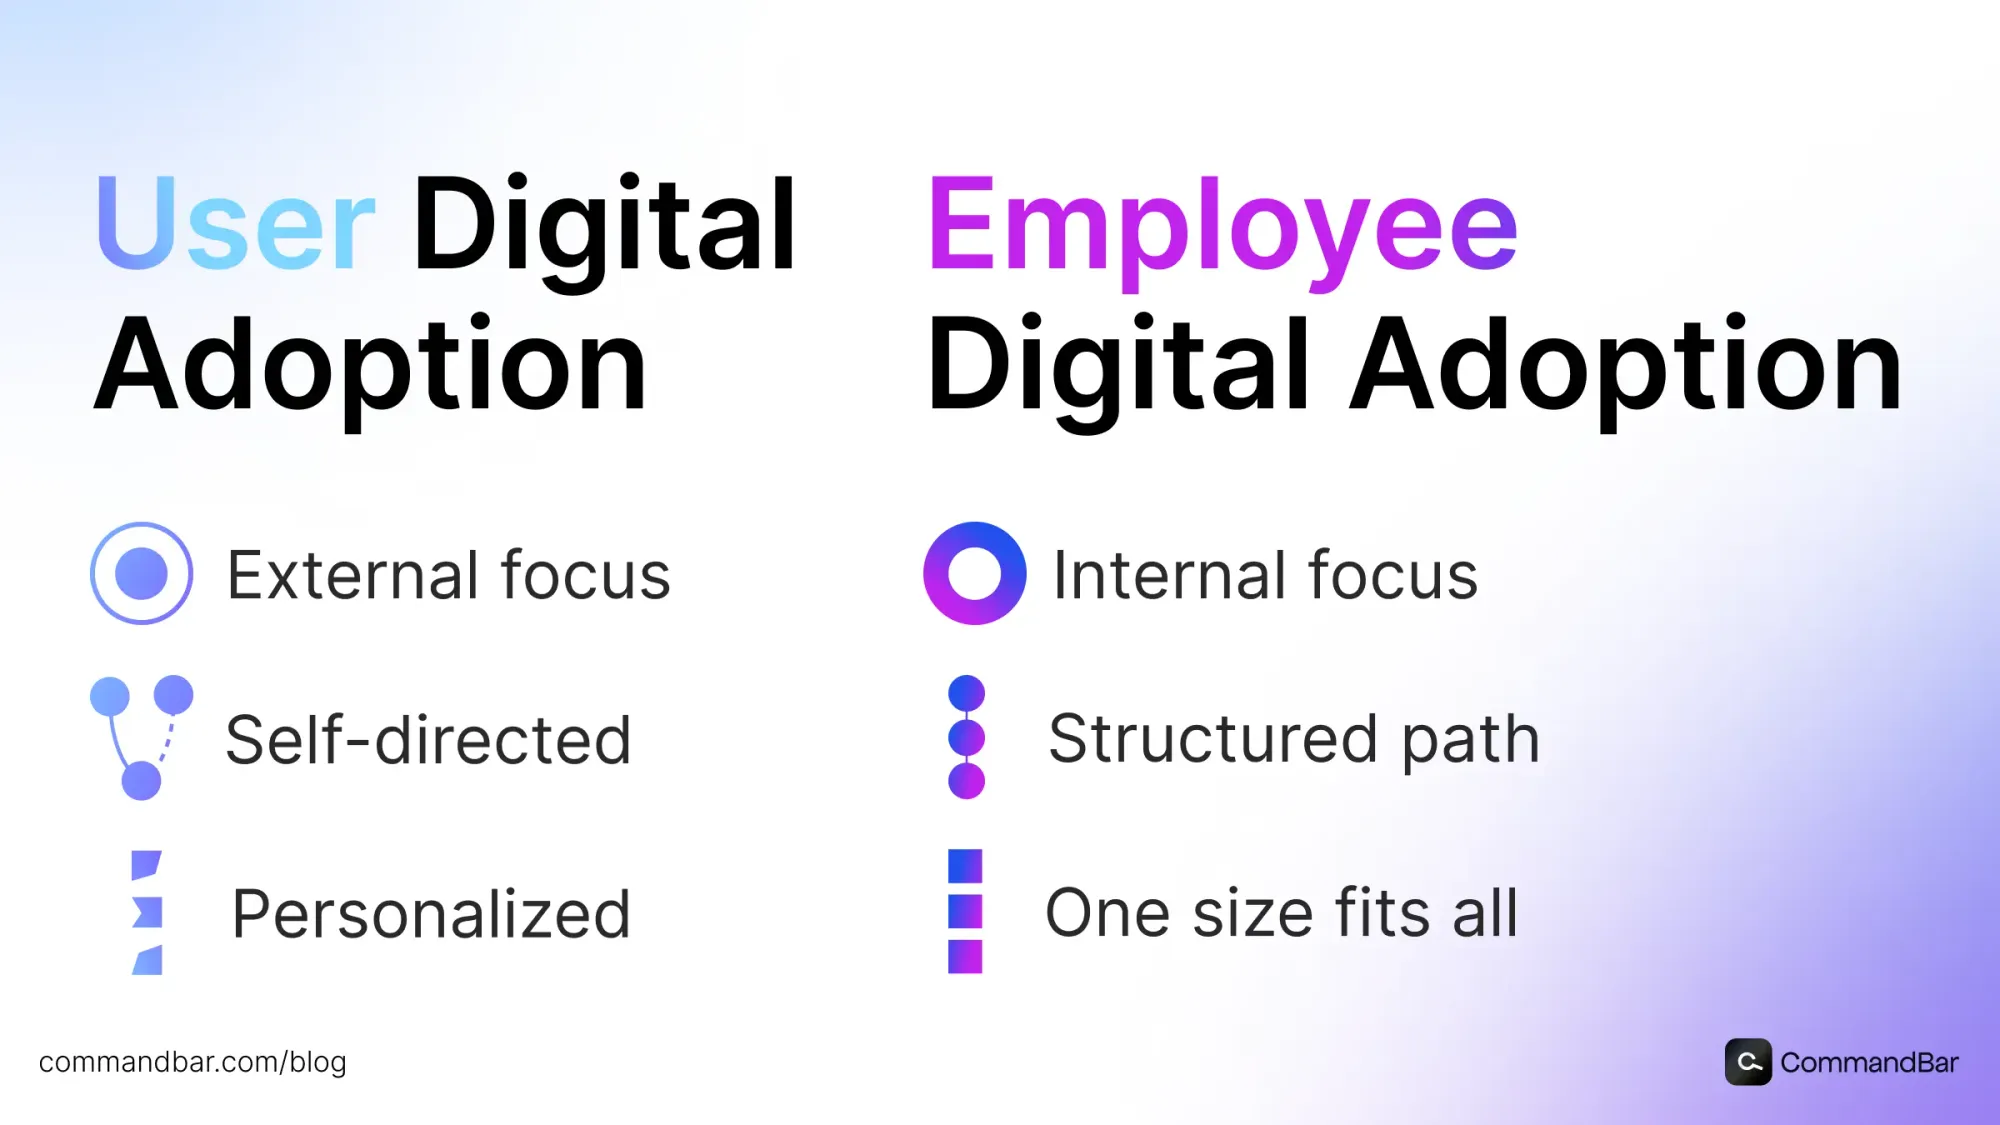 User vs. Employee digital adoption